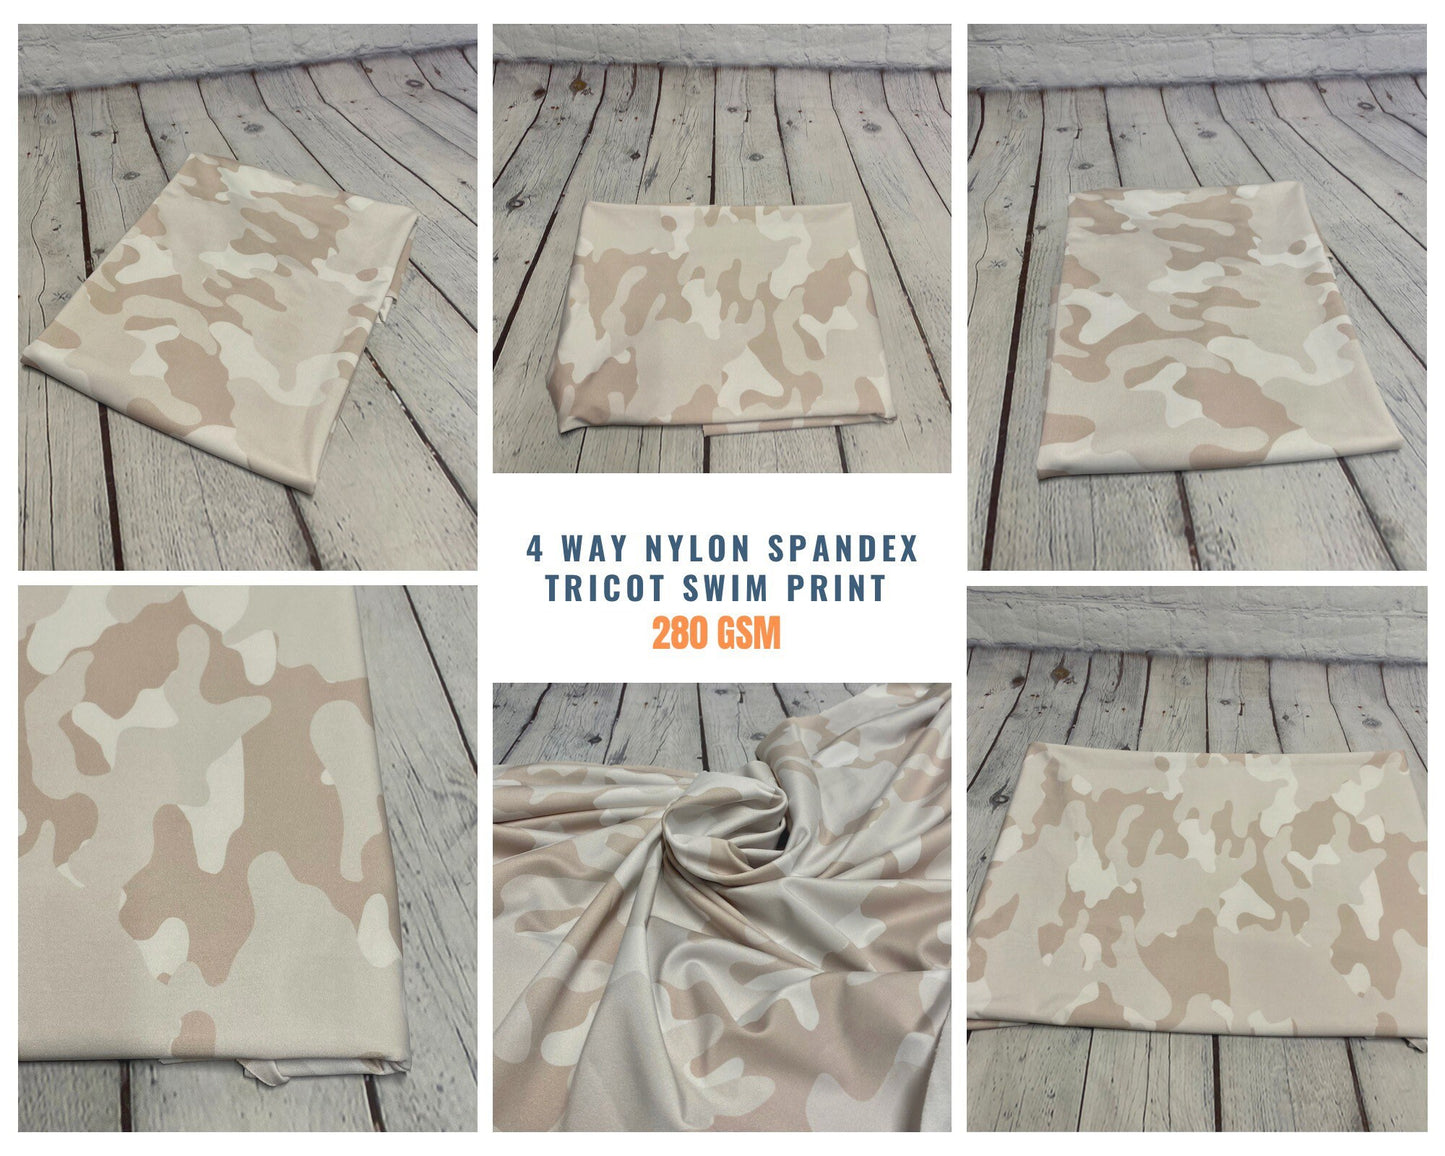 4 Way Stretch Print Nylon Spandex Fabric By The Yard Tricot Swim Wear Bikini Active Wear Tan Nude Camouflage Army Print 280 GSM